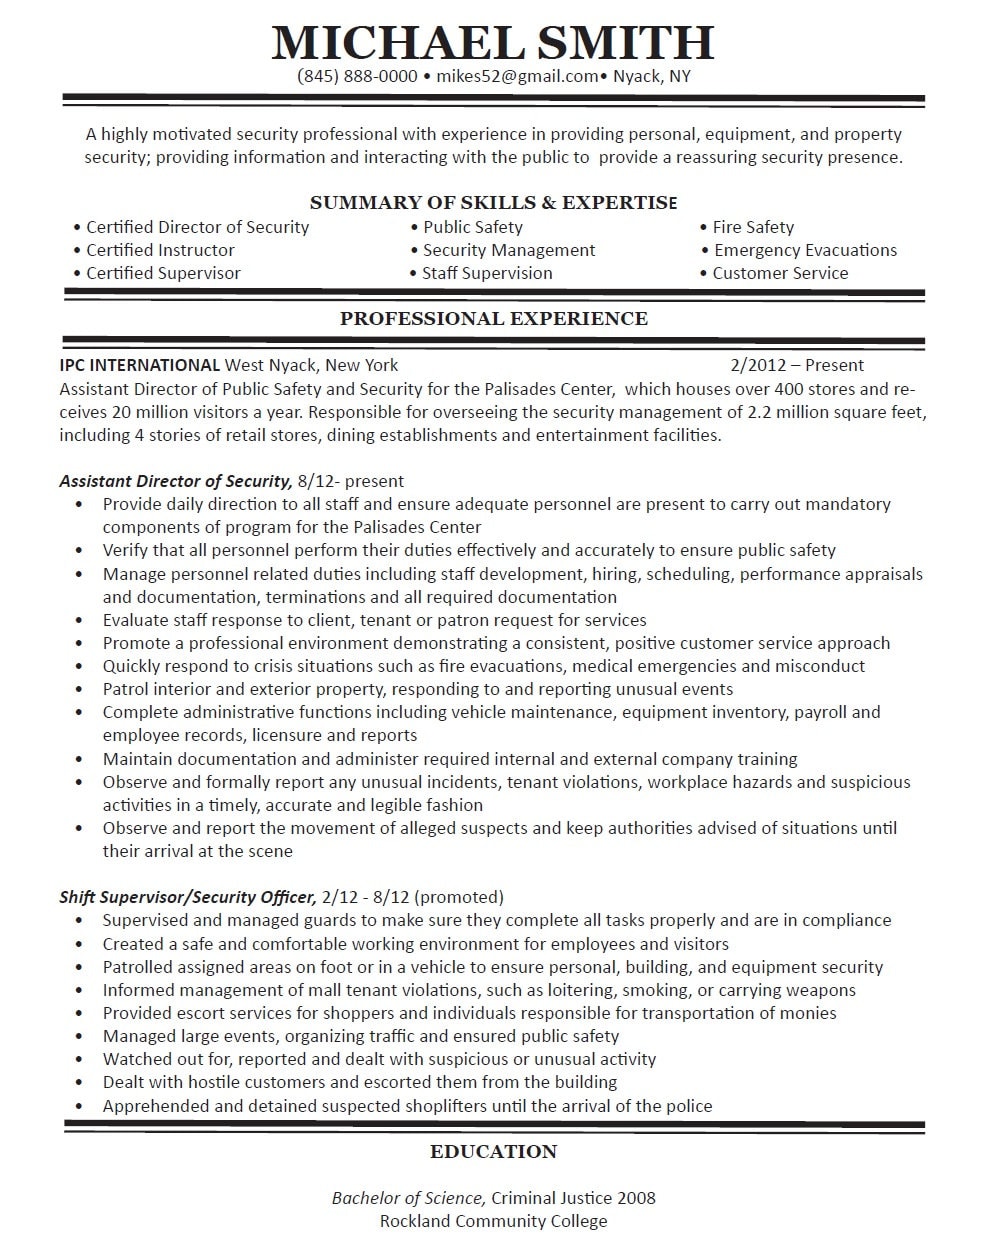 Career resume writing help